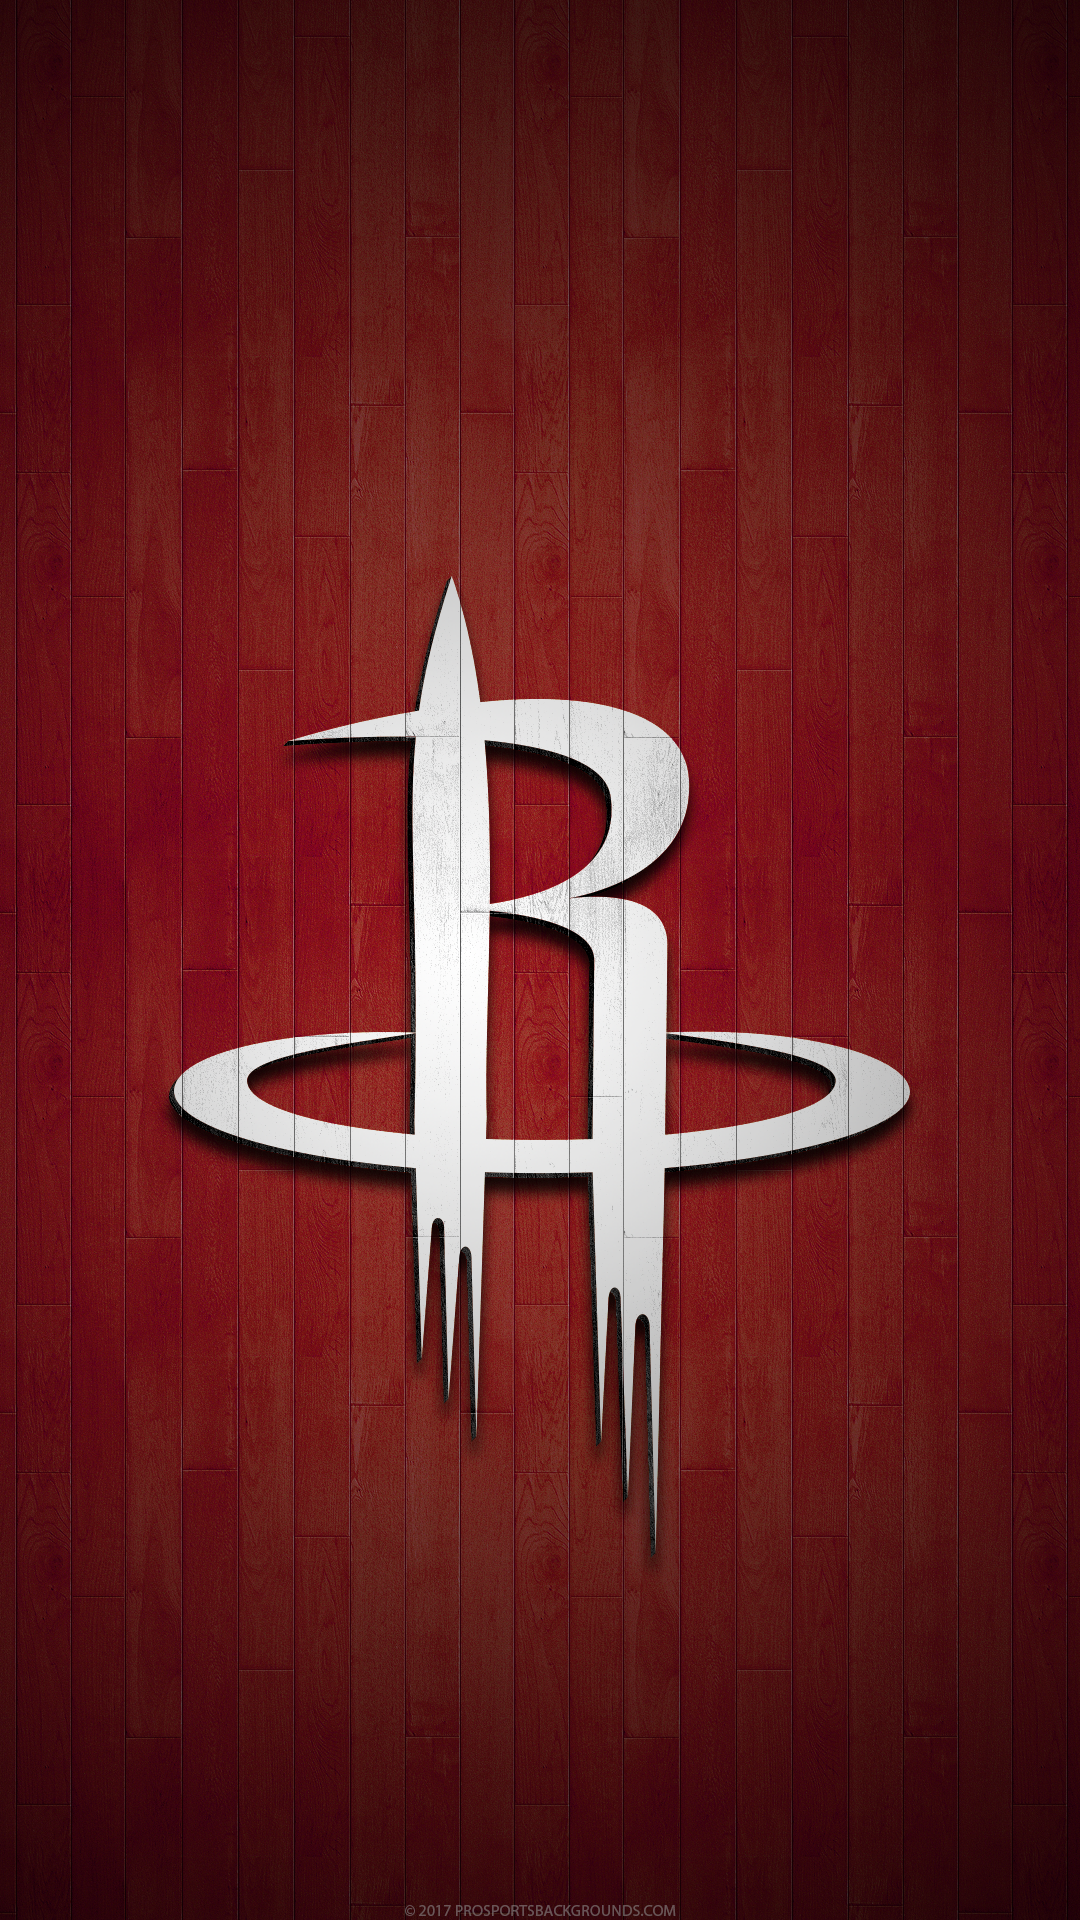 Sports Houston Rockets Wallpaper Id